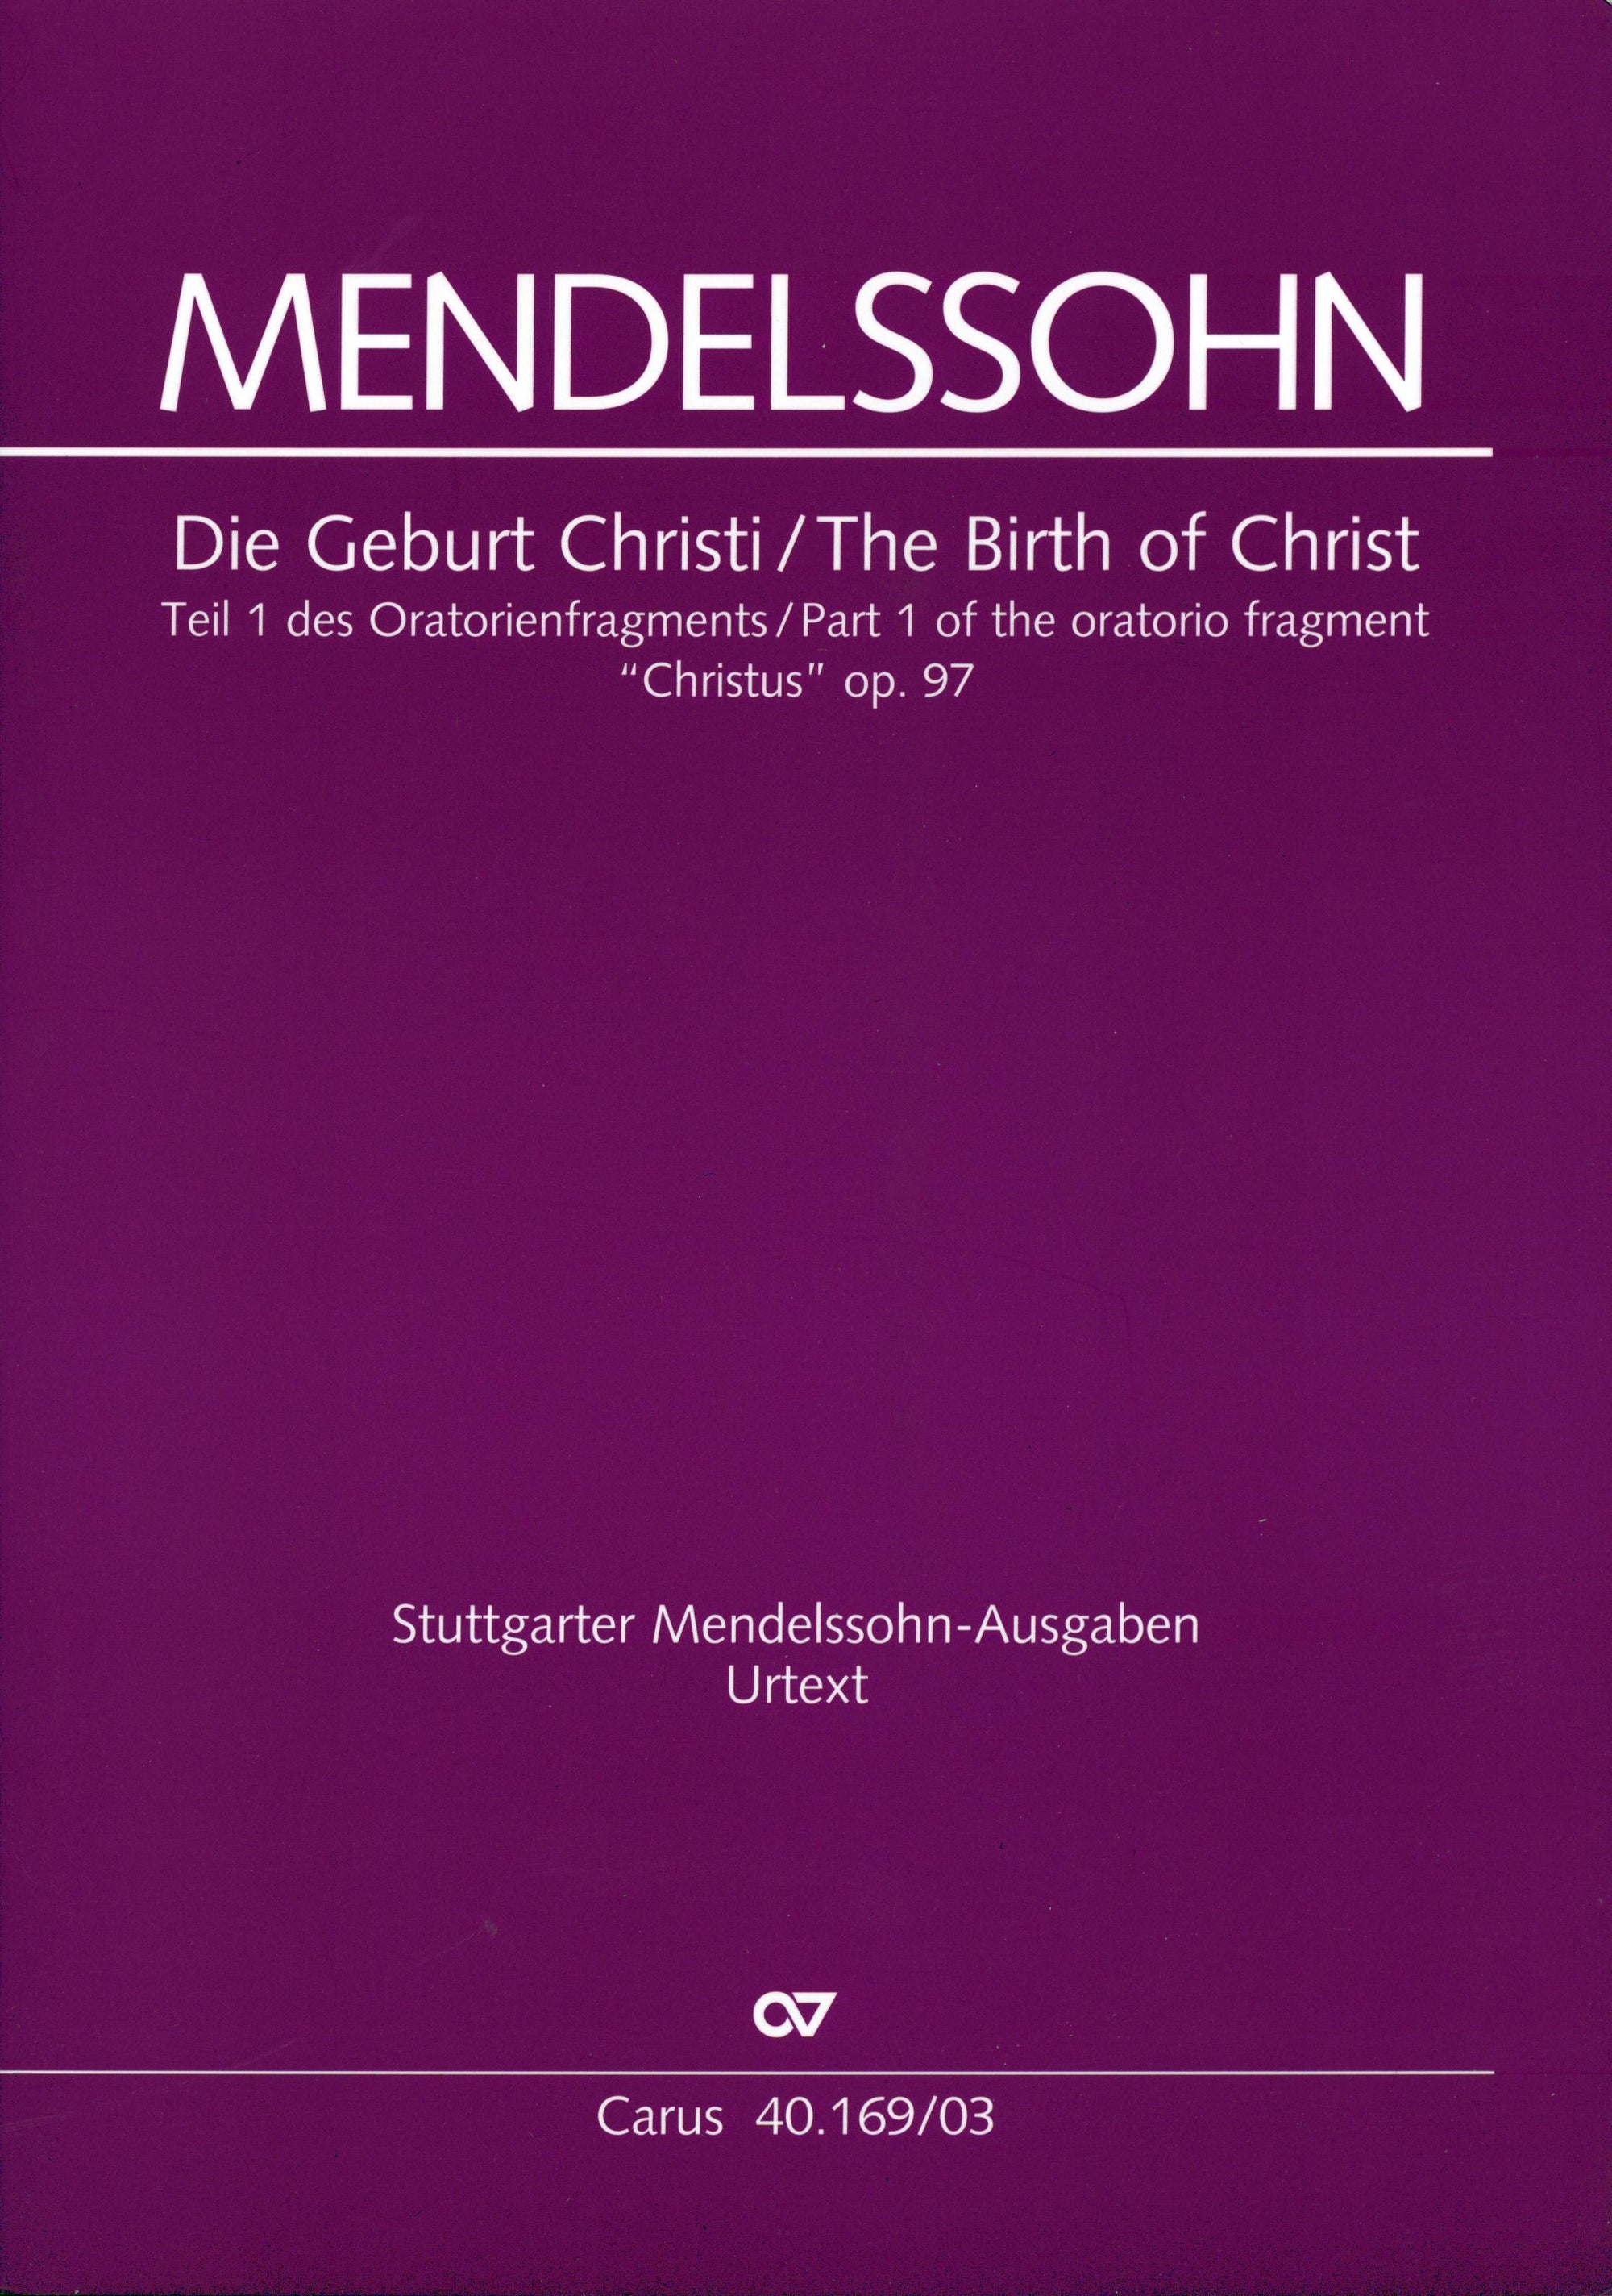 Mendelssohn: The Birth of Christ (Die Geburt Christi)